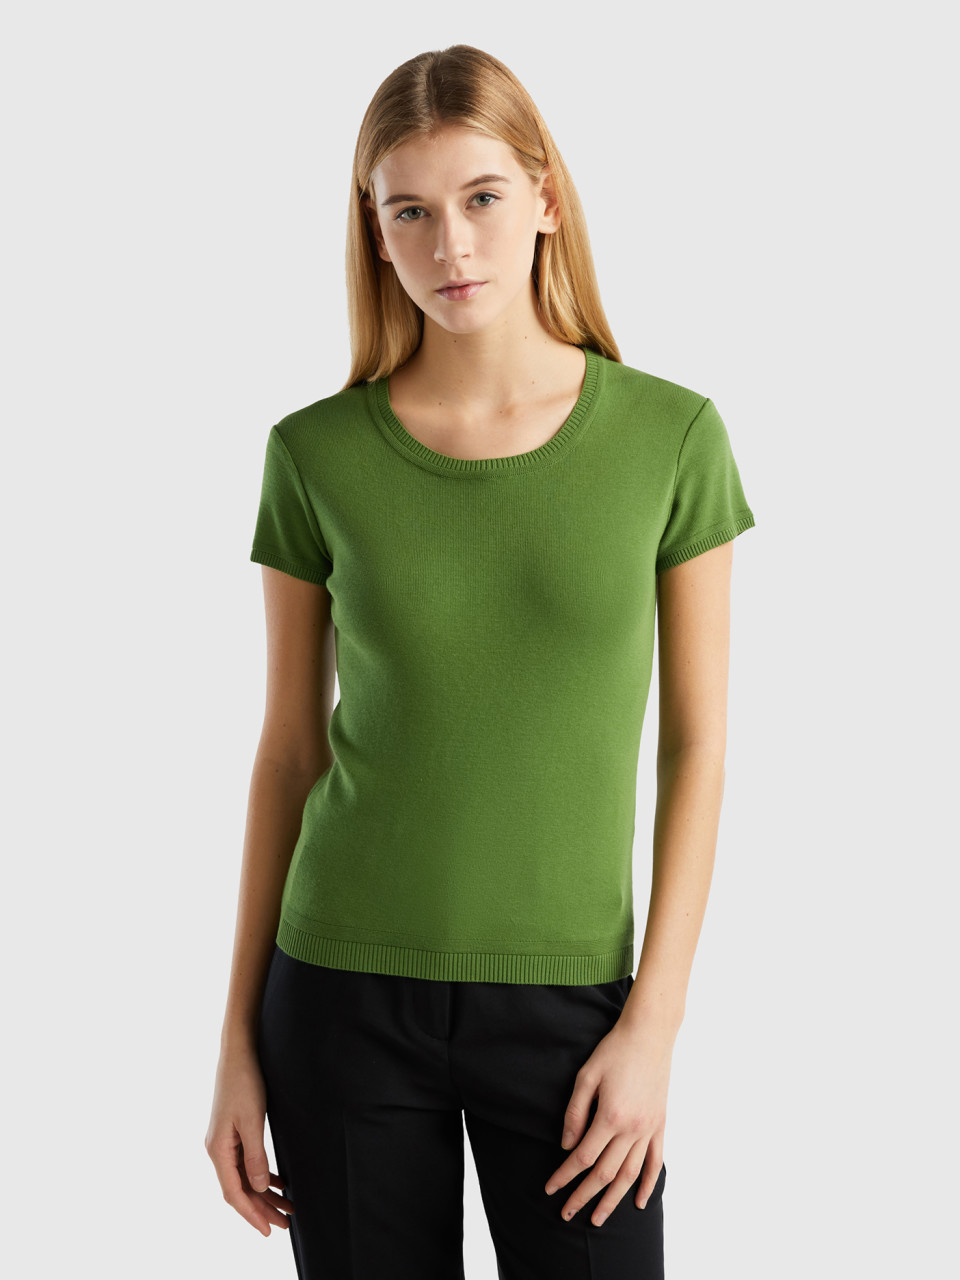 Benetton, Short Sleeve Sweater In 100% Cotton, Military Green, Women